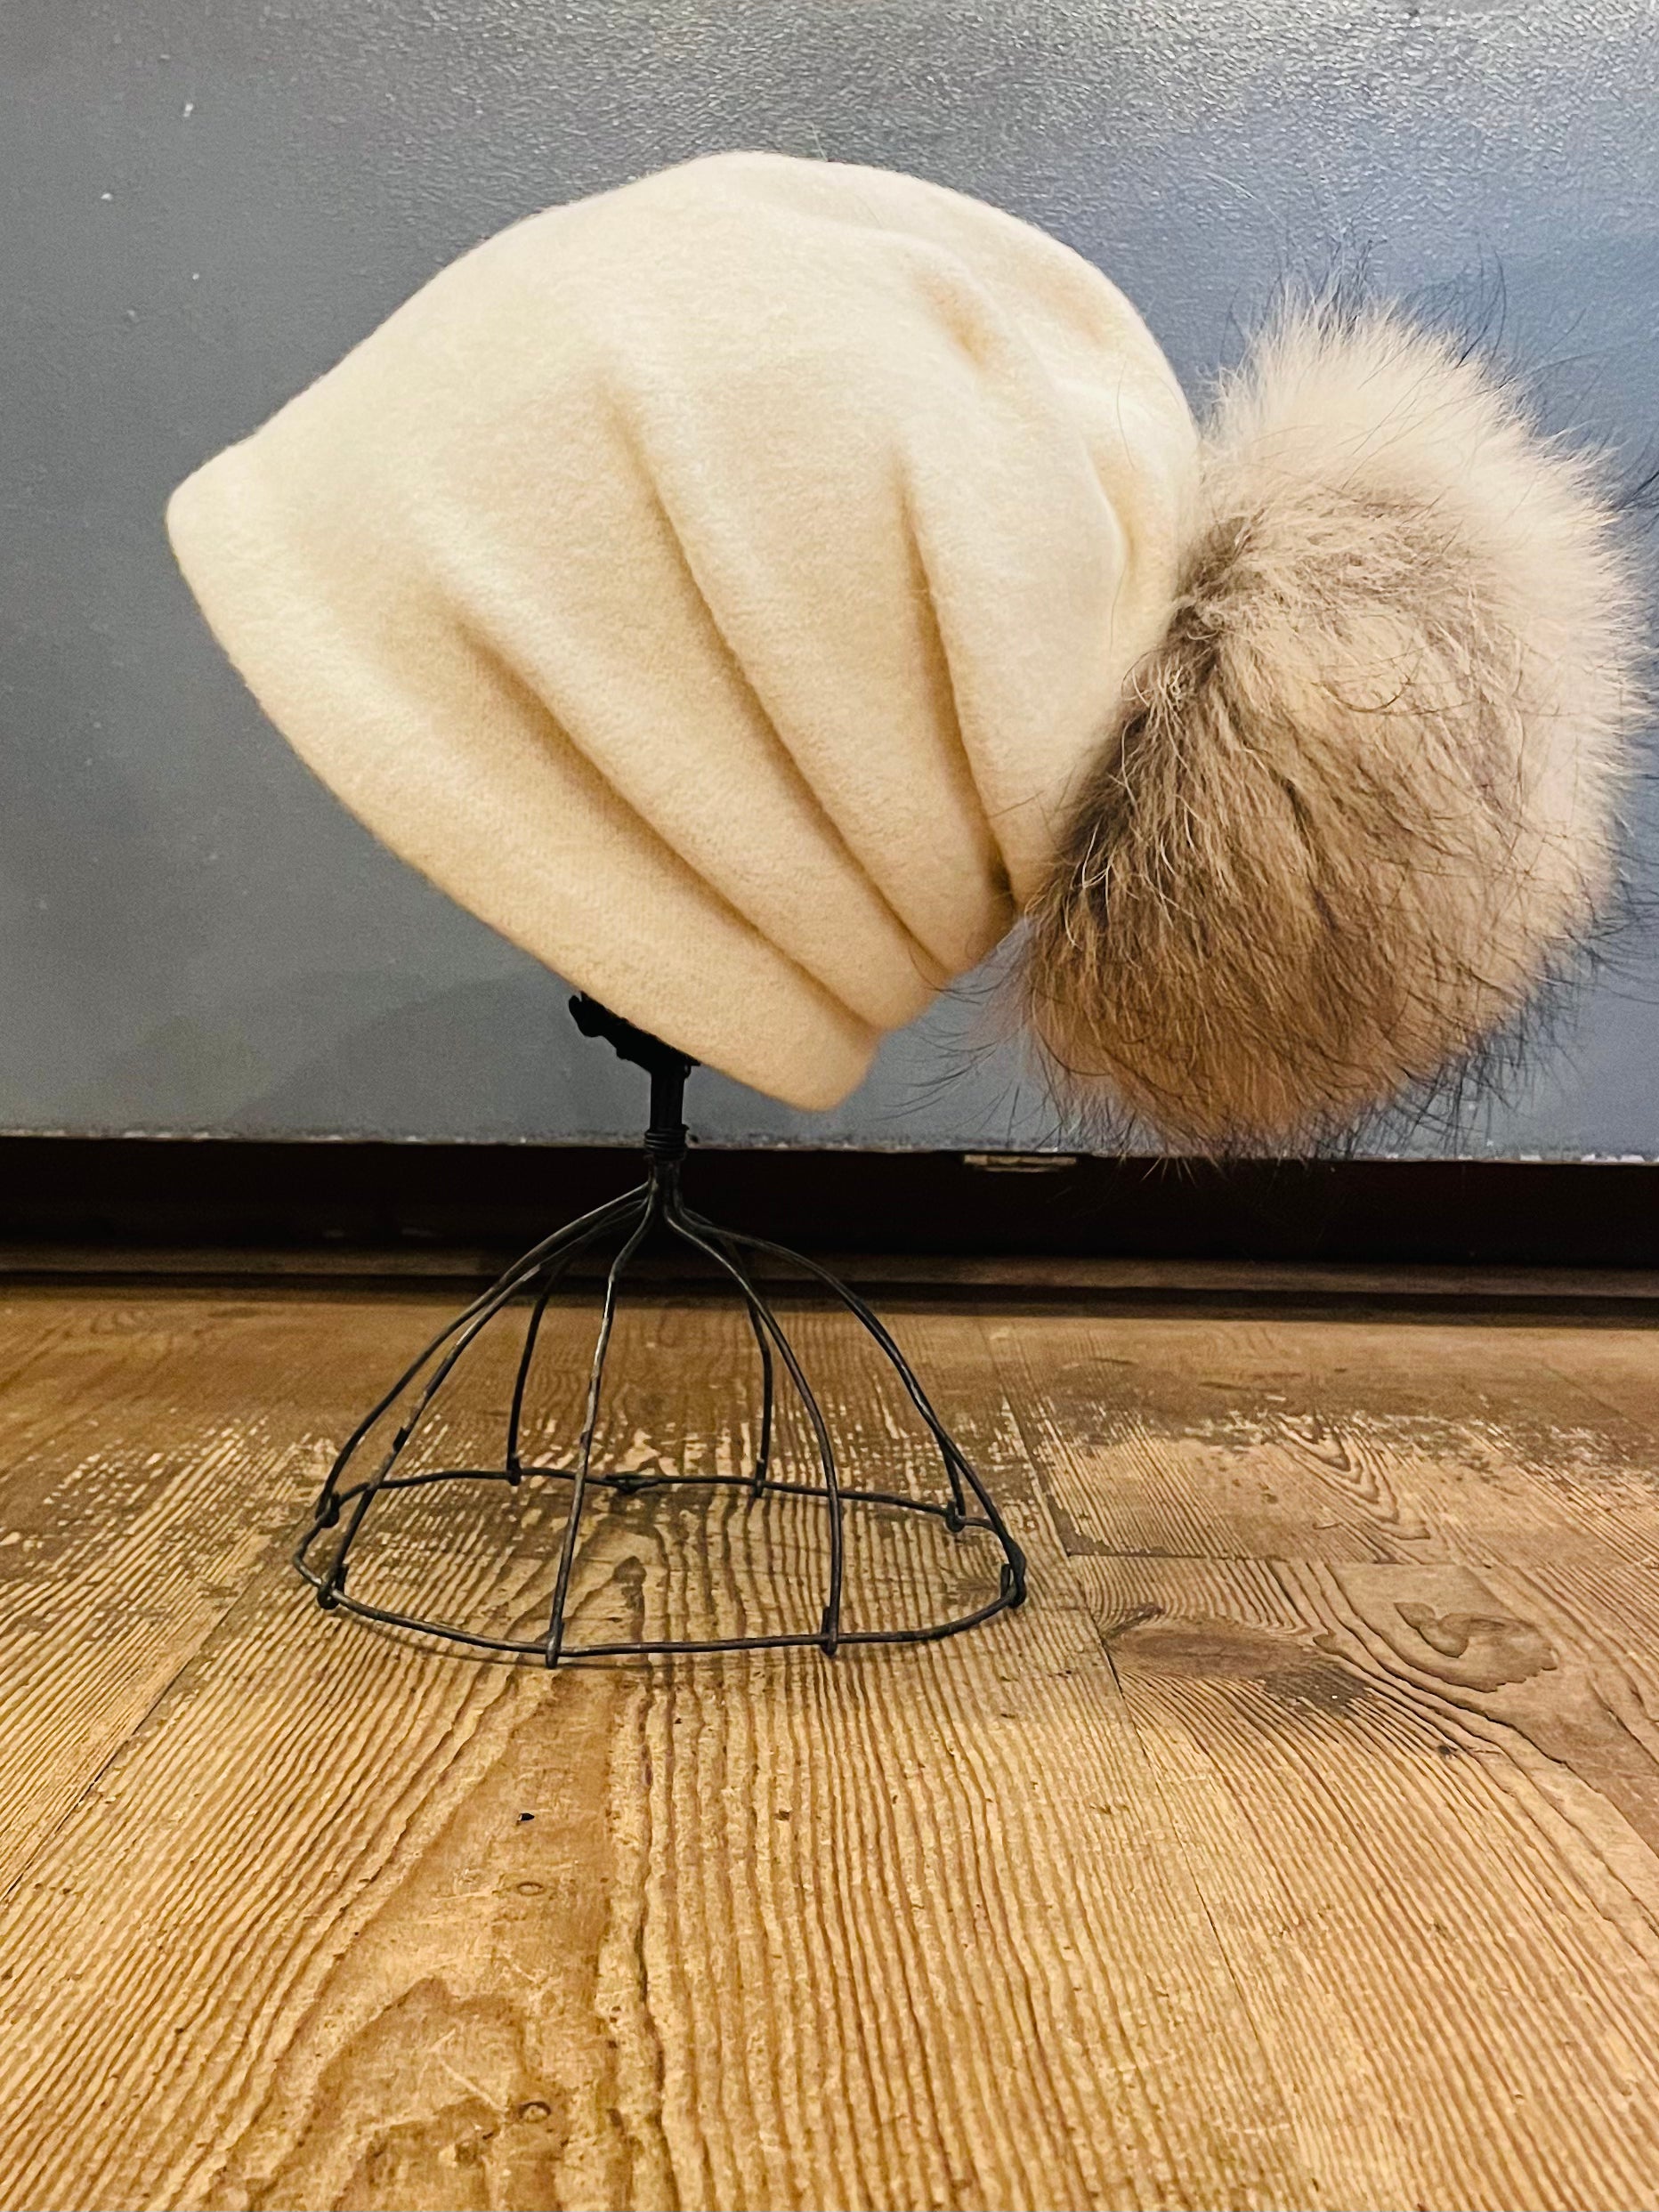 Mid Pink Knit Faux Fur Pom Pom Bobble Hat